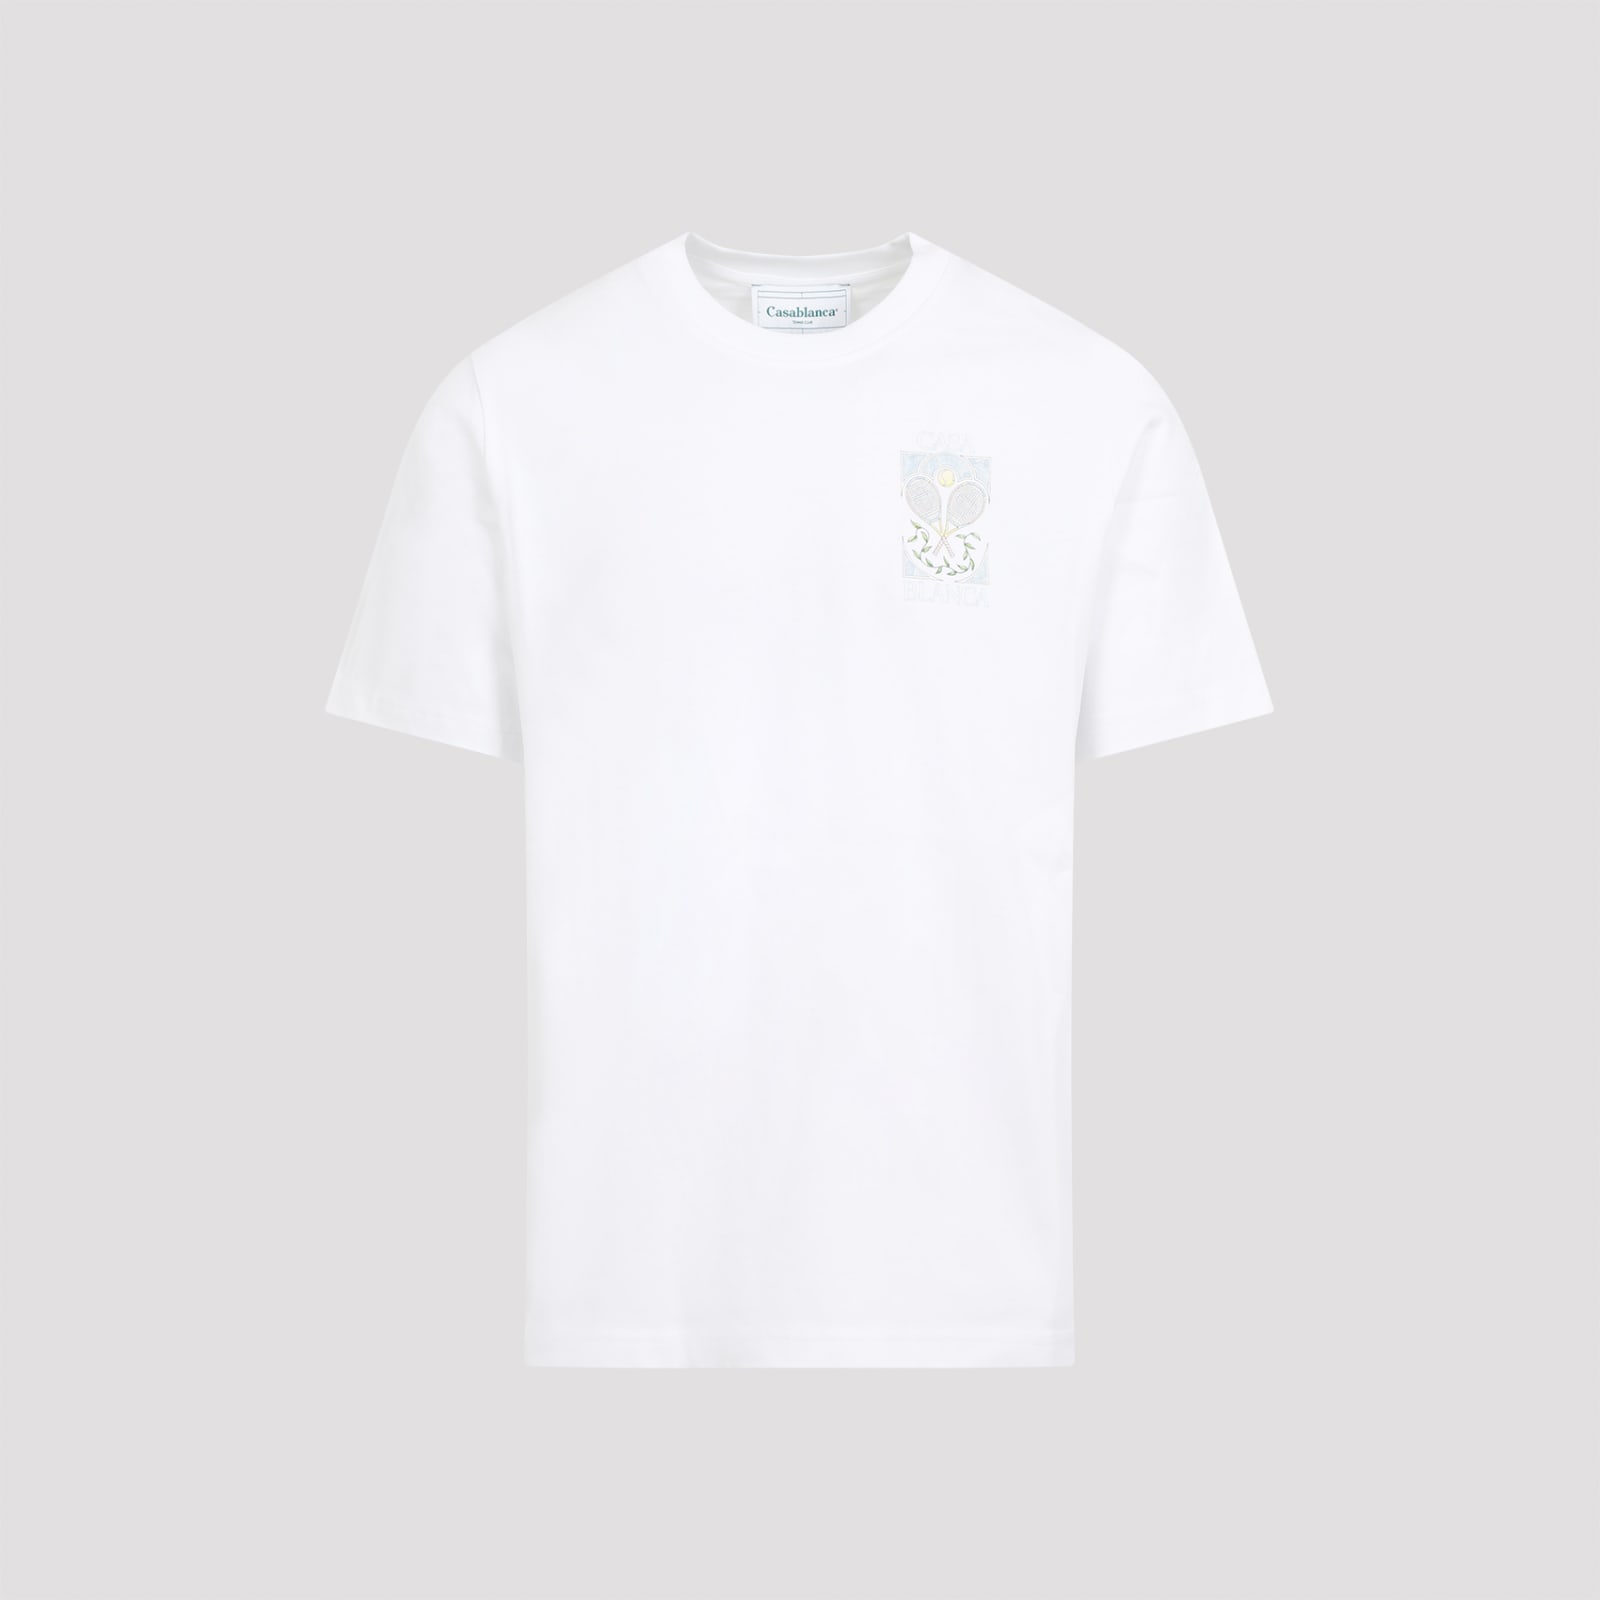 Tennis Pastelle T-shirt